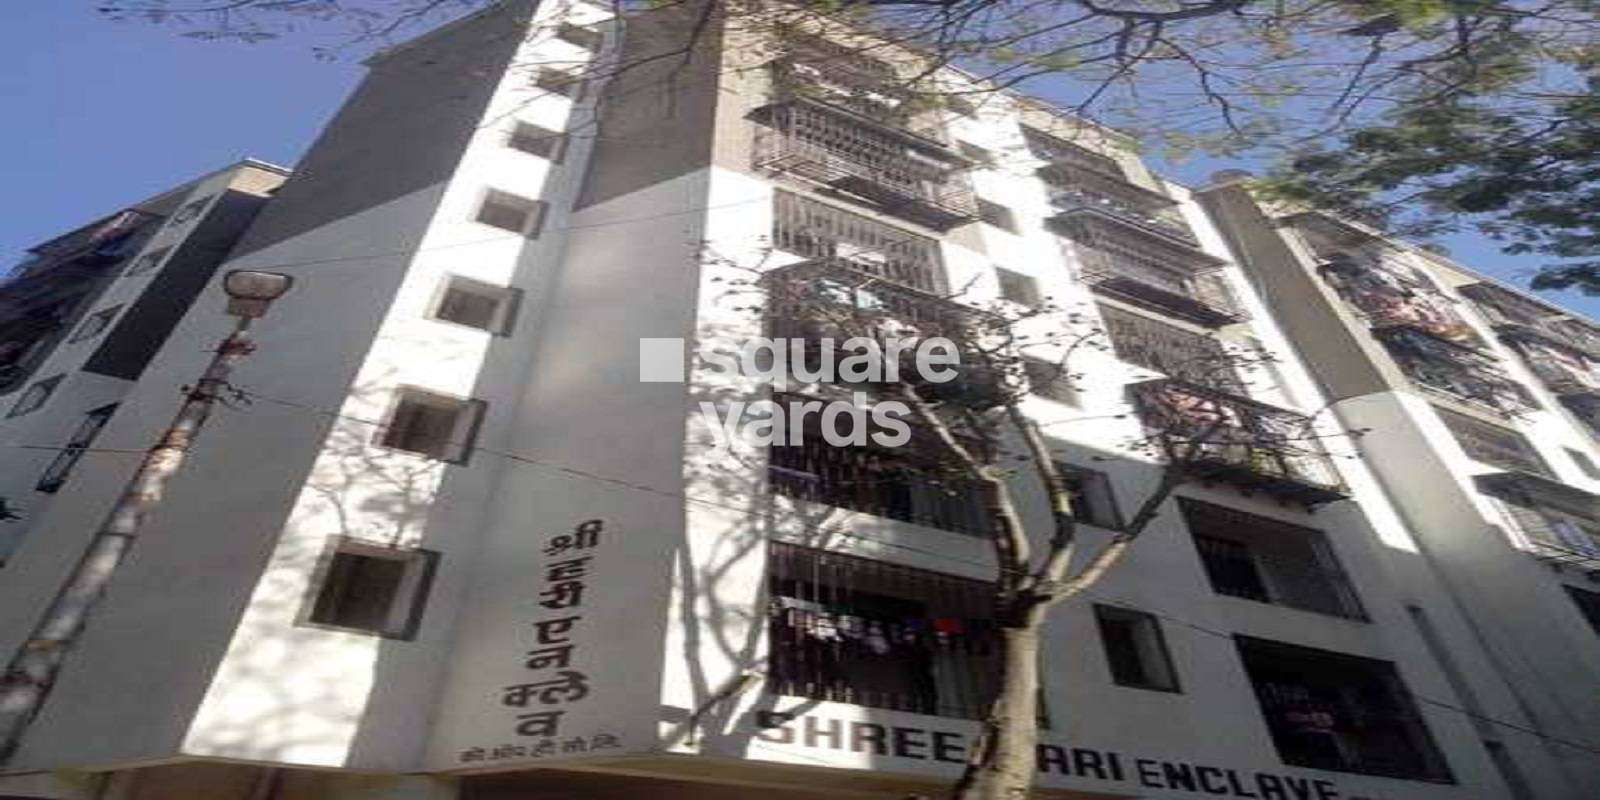 Shree Hari Enclave Apartment Cover Image